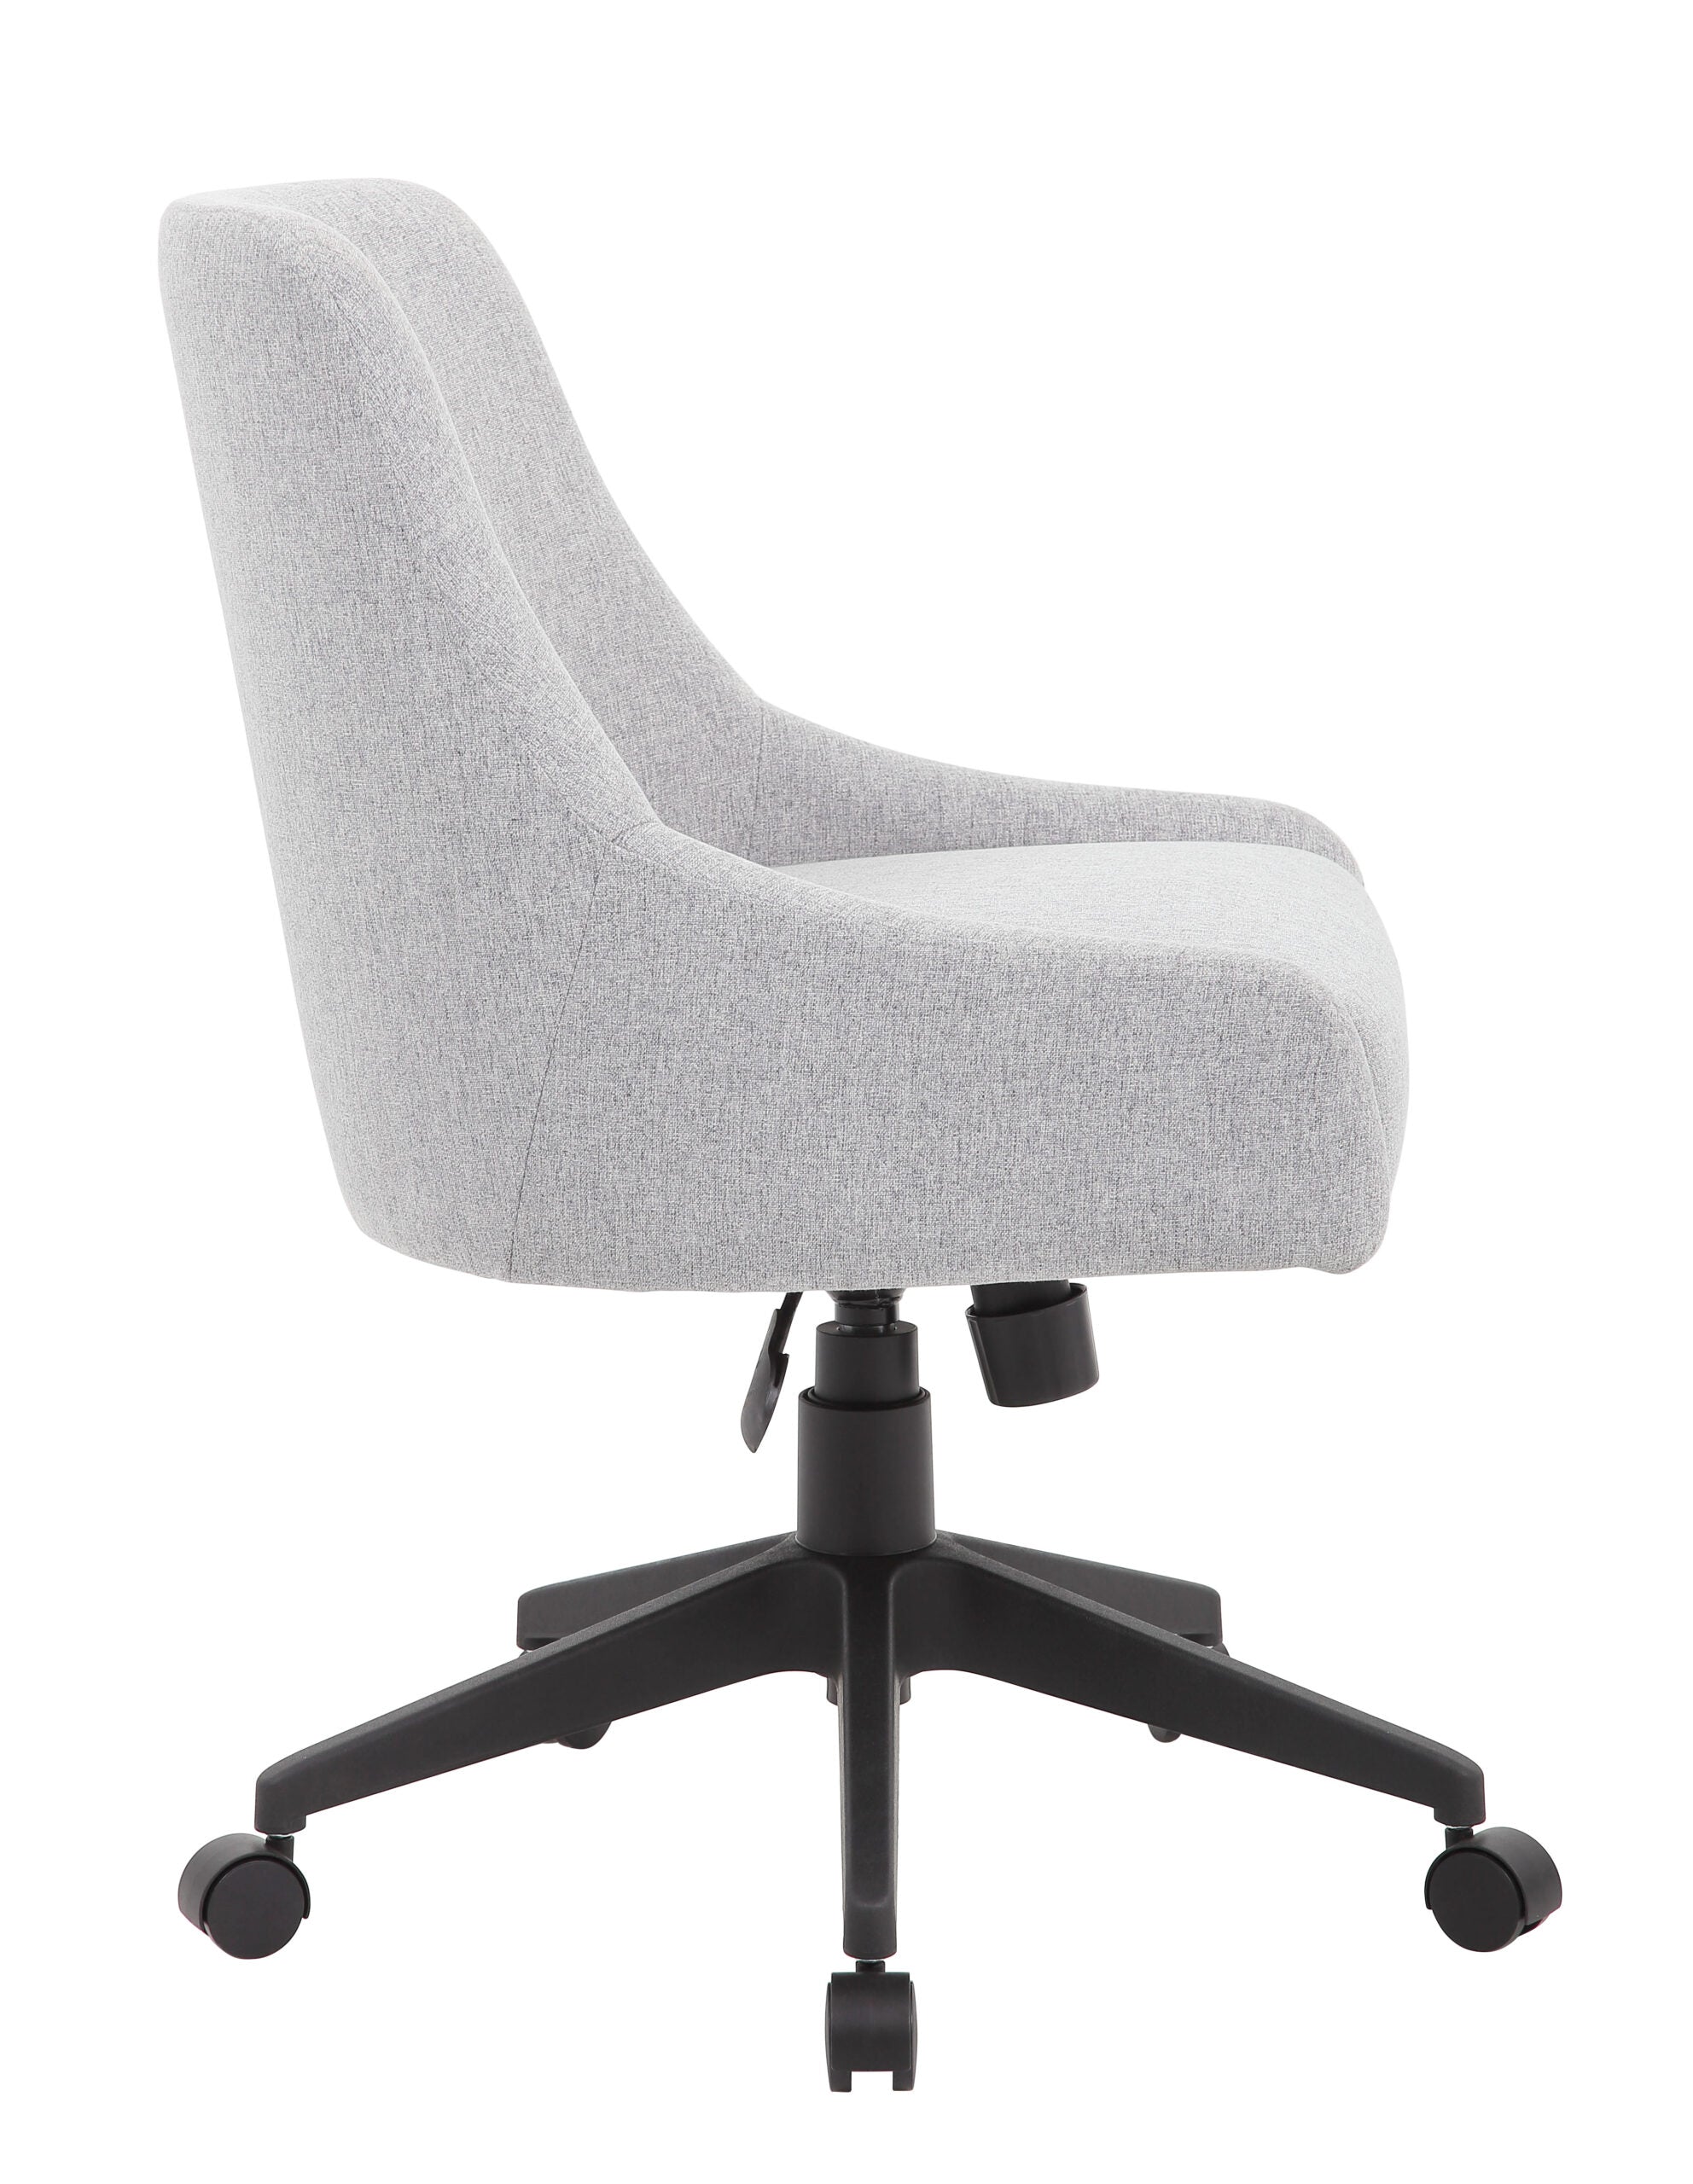 B576-GY - Boyle Desk Chair by Boss